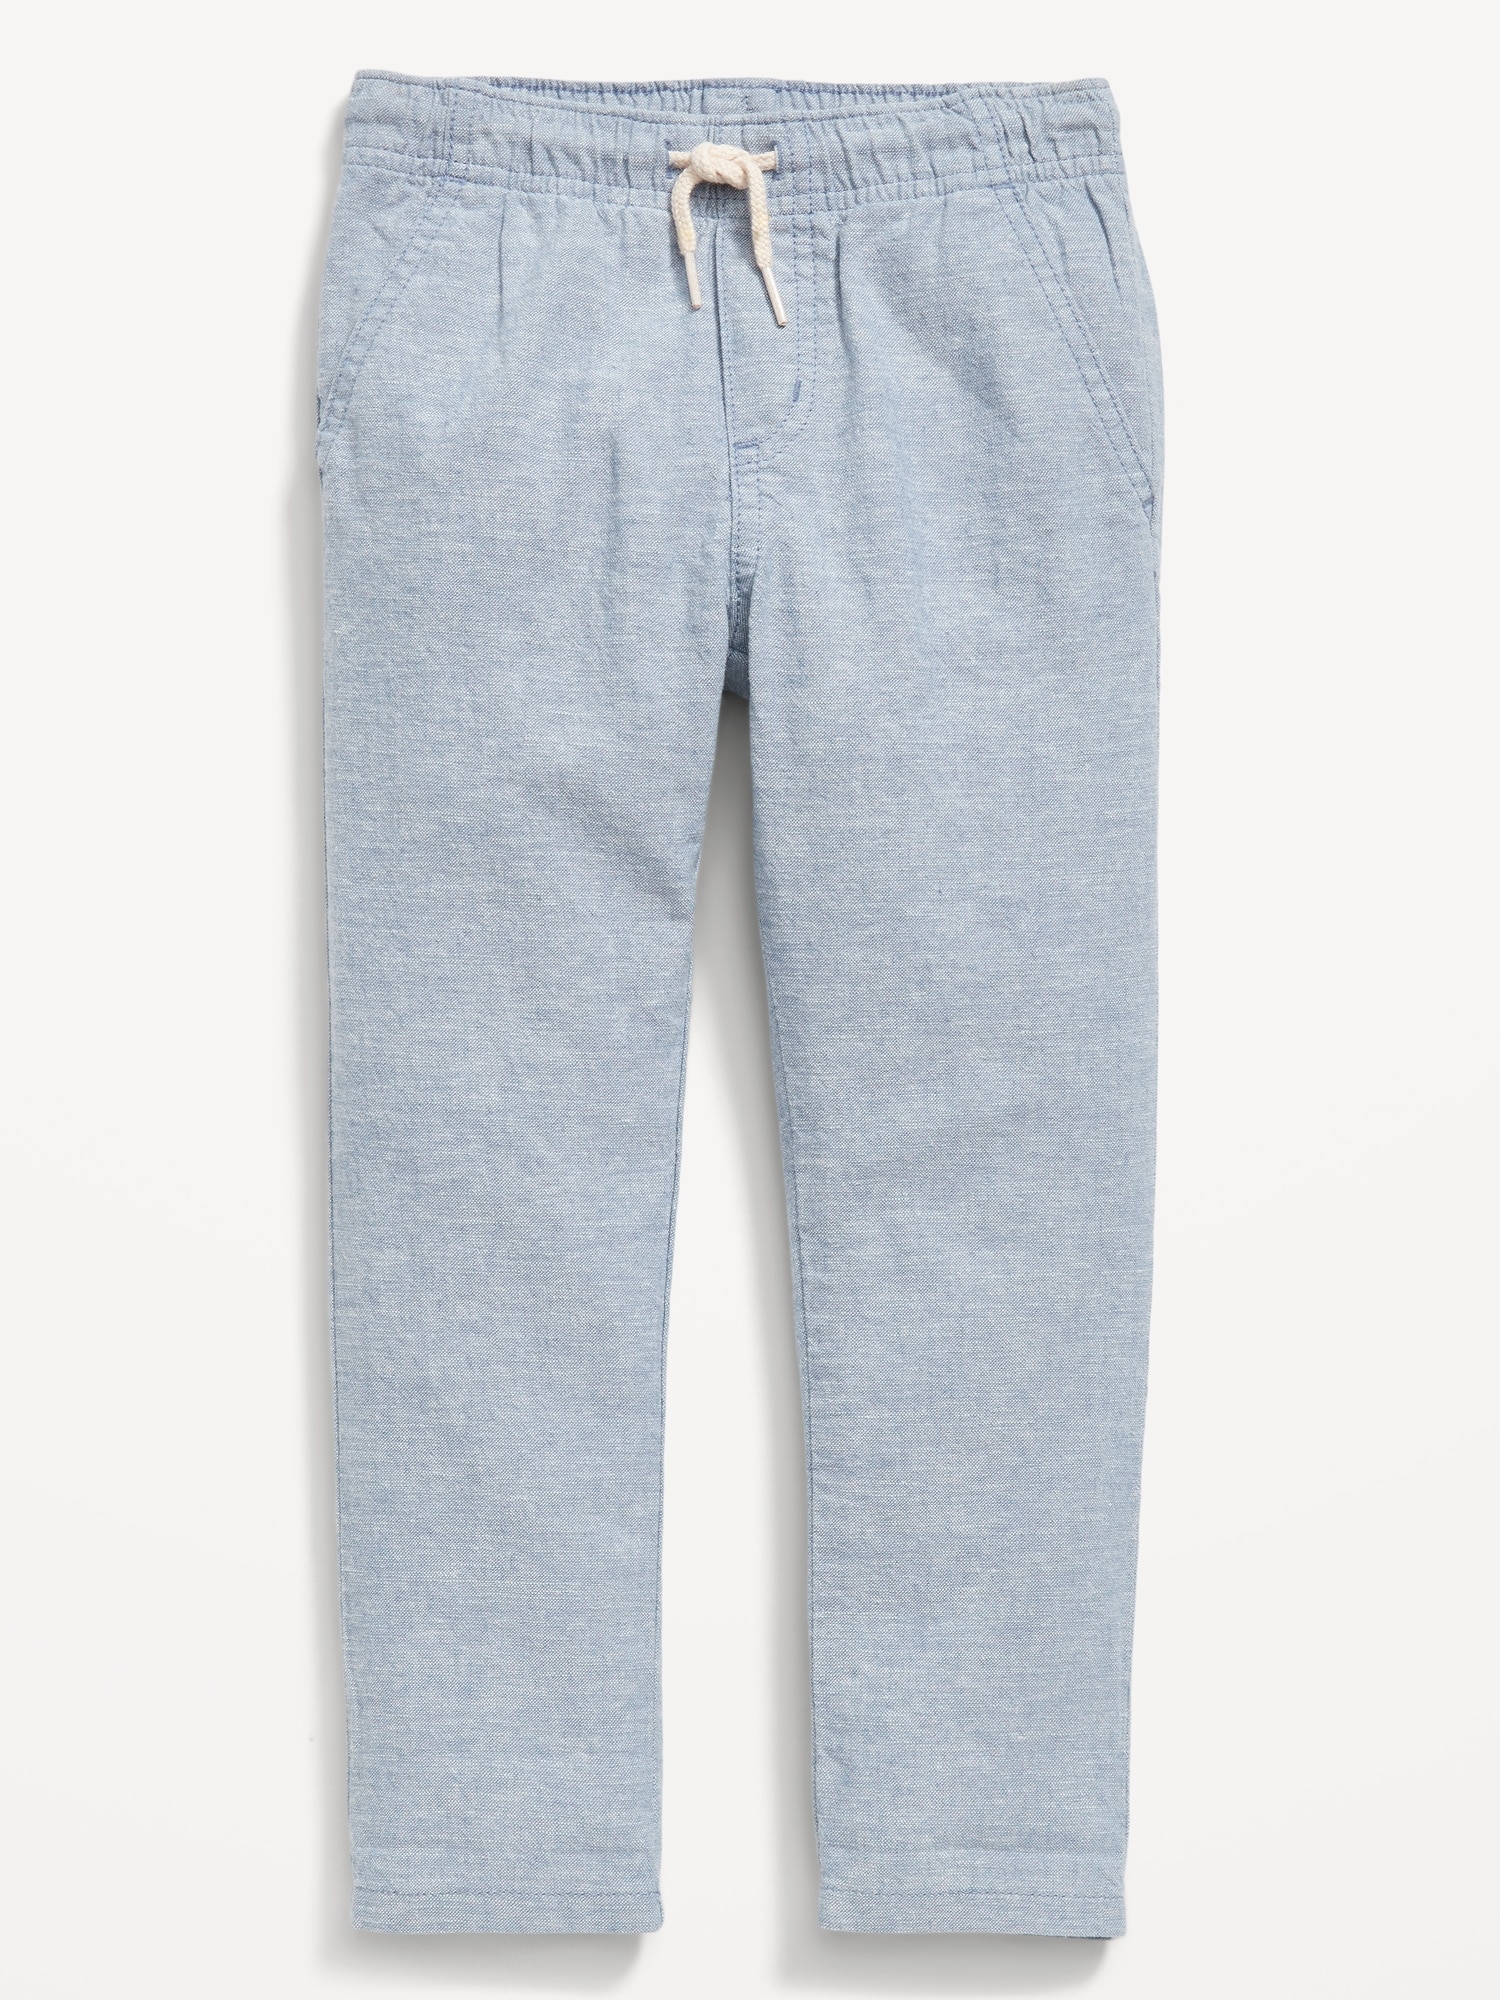 Loose Pull-On Linen-Blend Pants for Toddler Boys